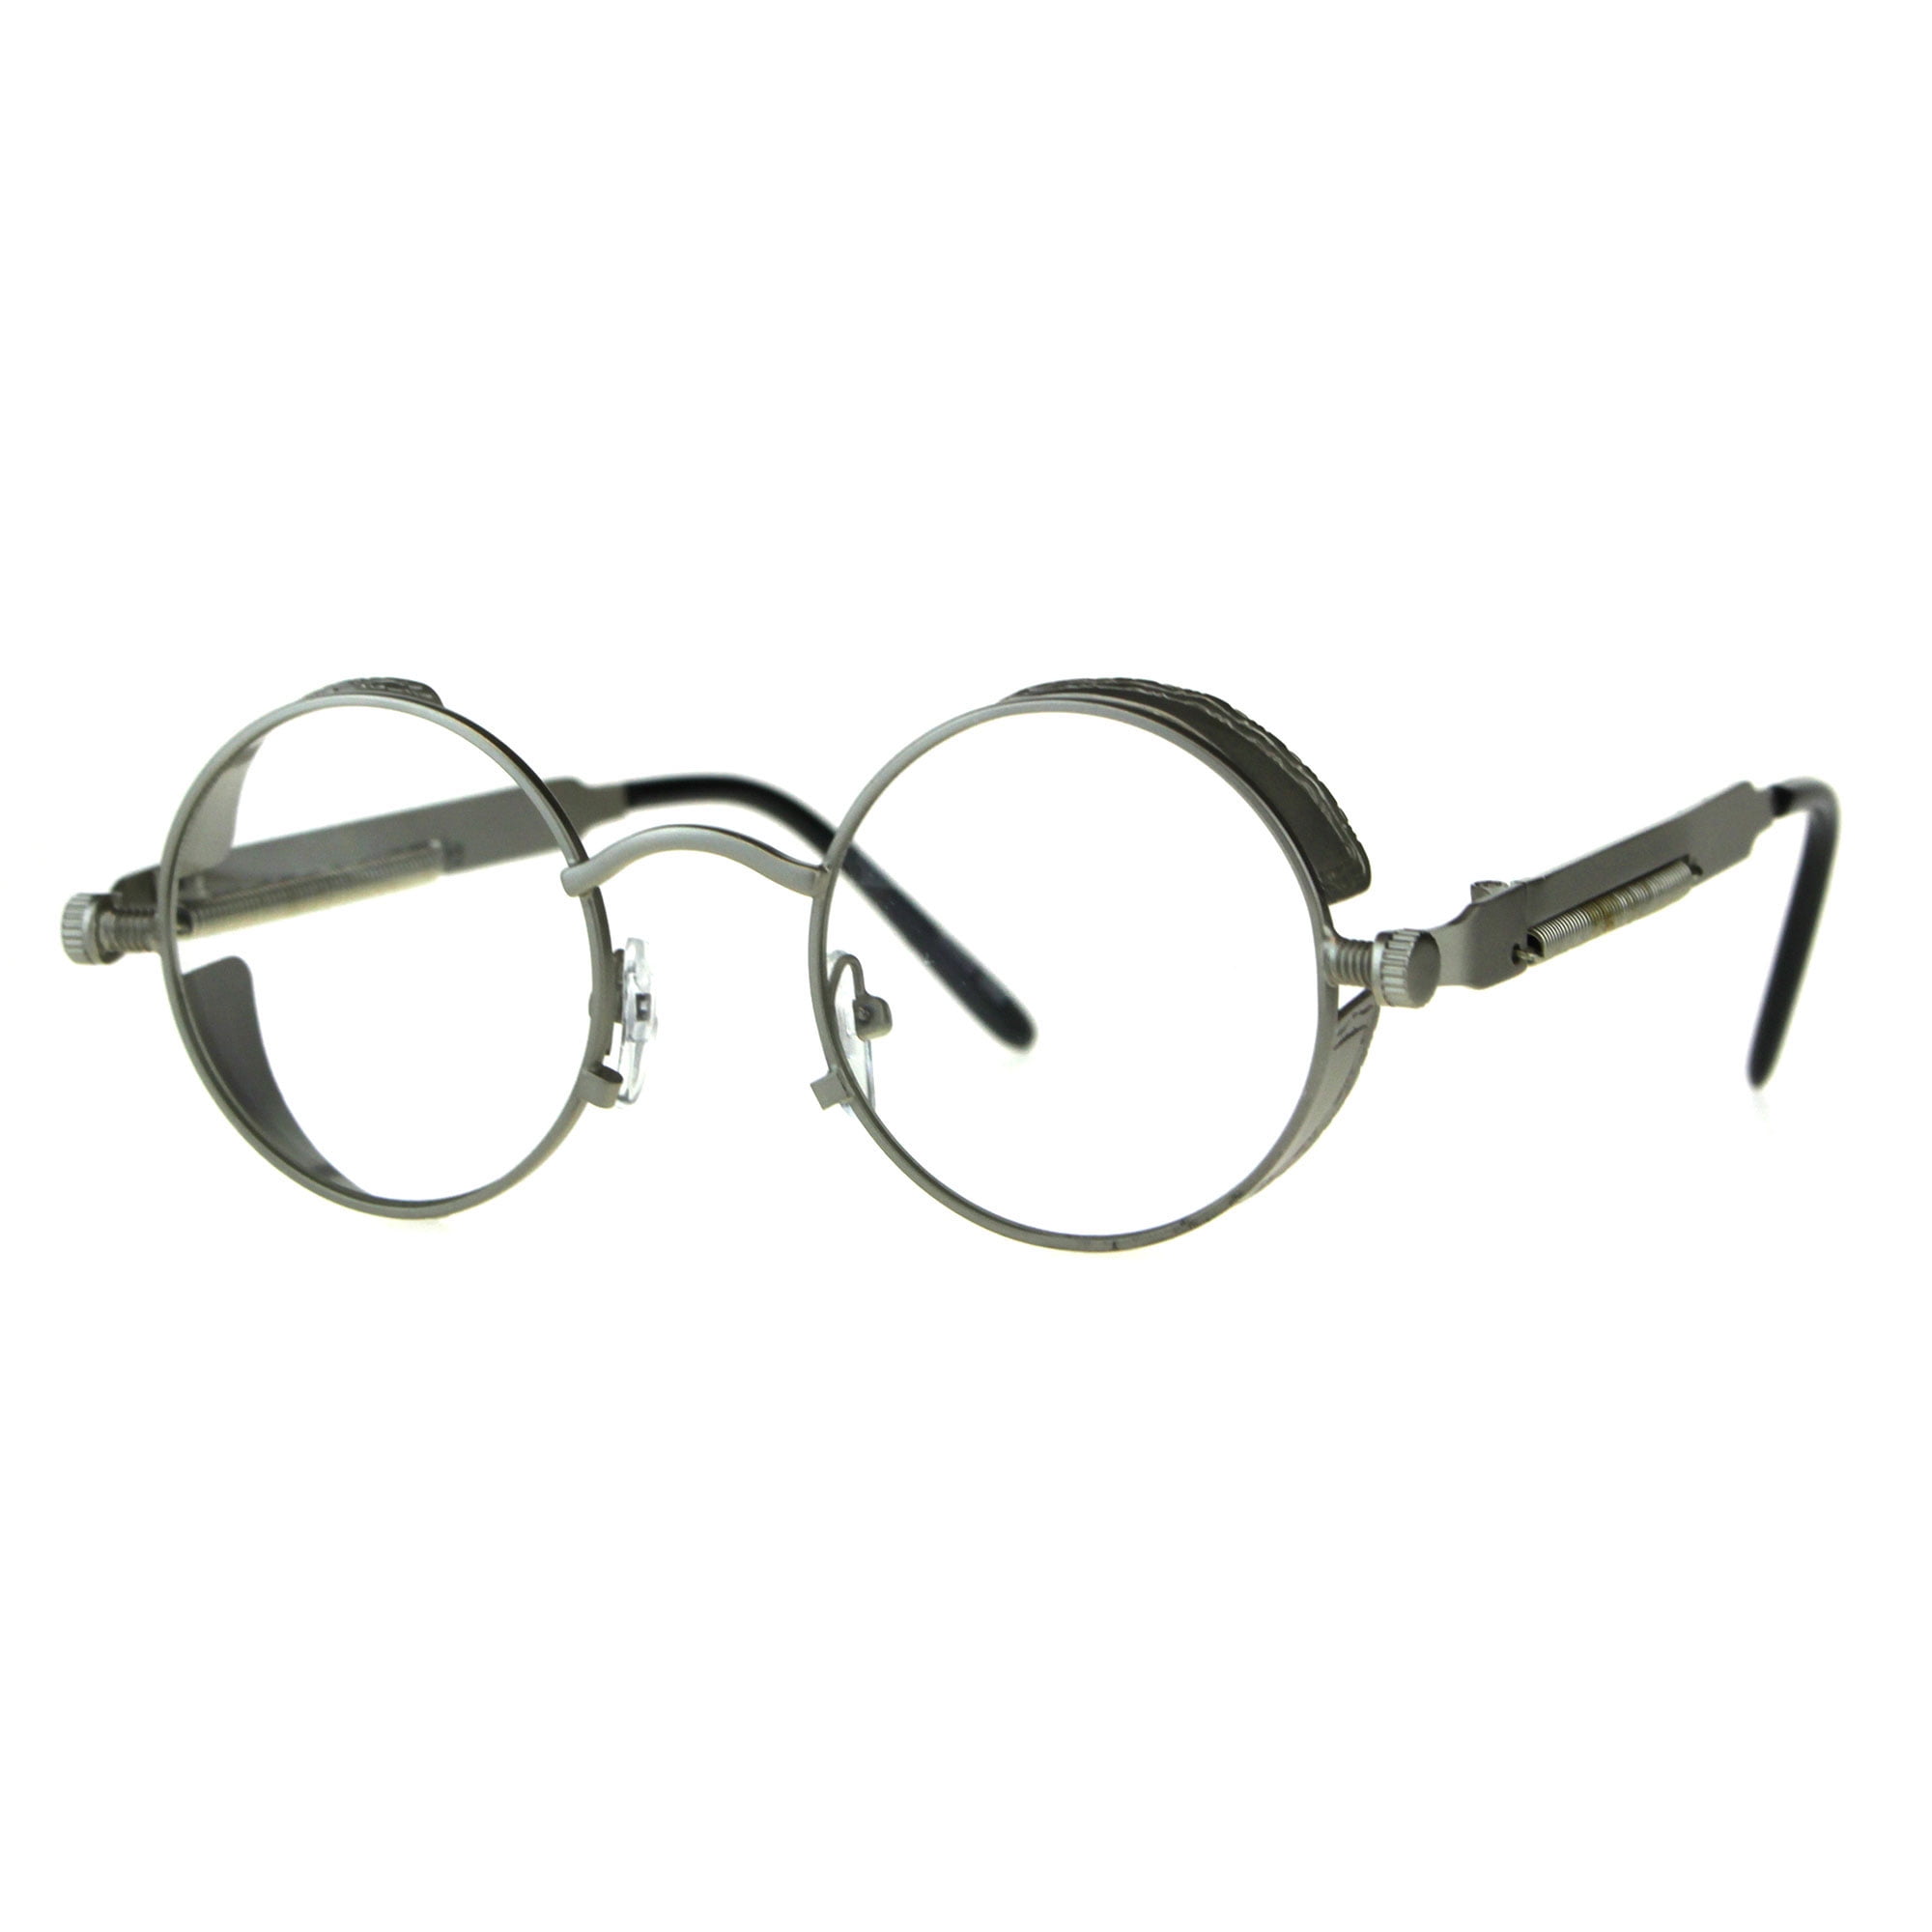 Big Round Clear Lens Tortoiseshell/Black Geek Glasses Steampunk Wally Hipster 